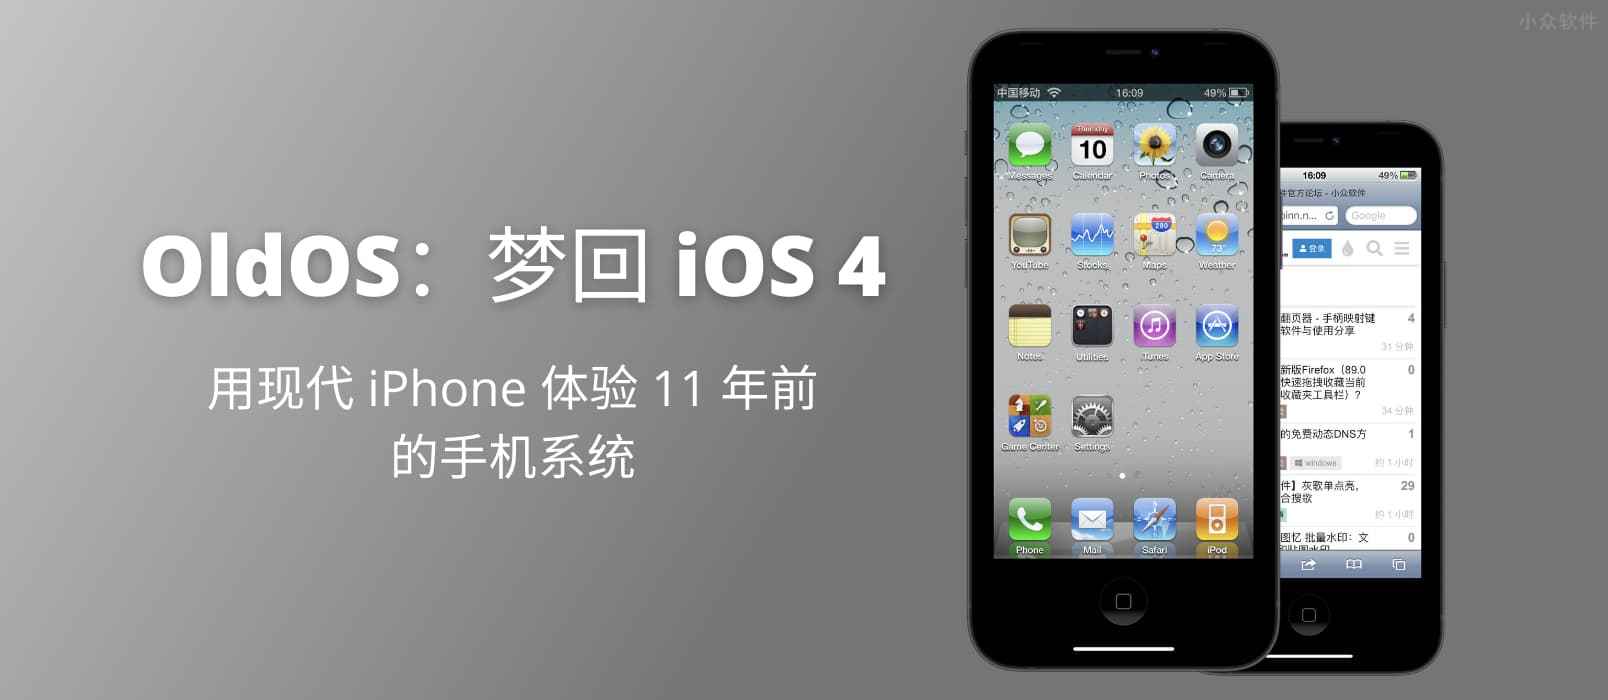 OldOS – 梦回 iOS 4，用现代 iPhone 体验 11 年前的手机系统